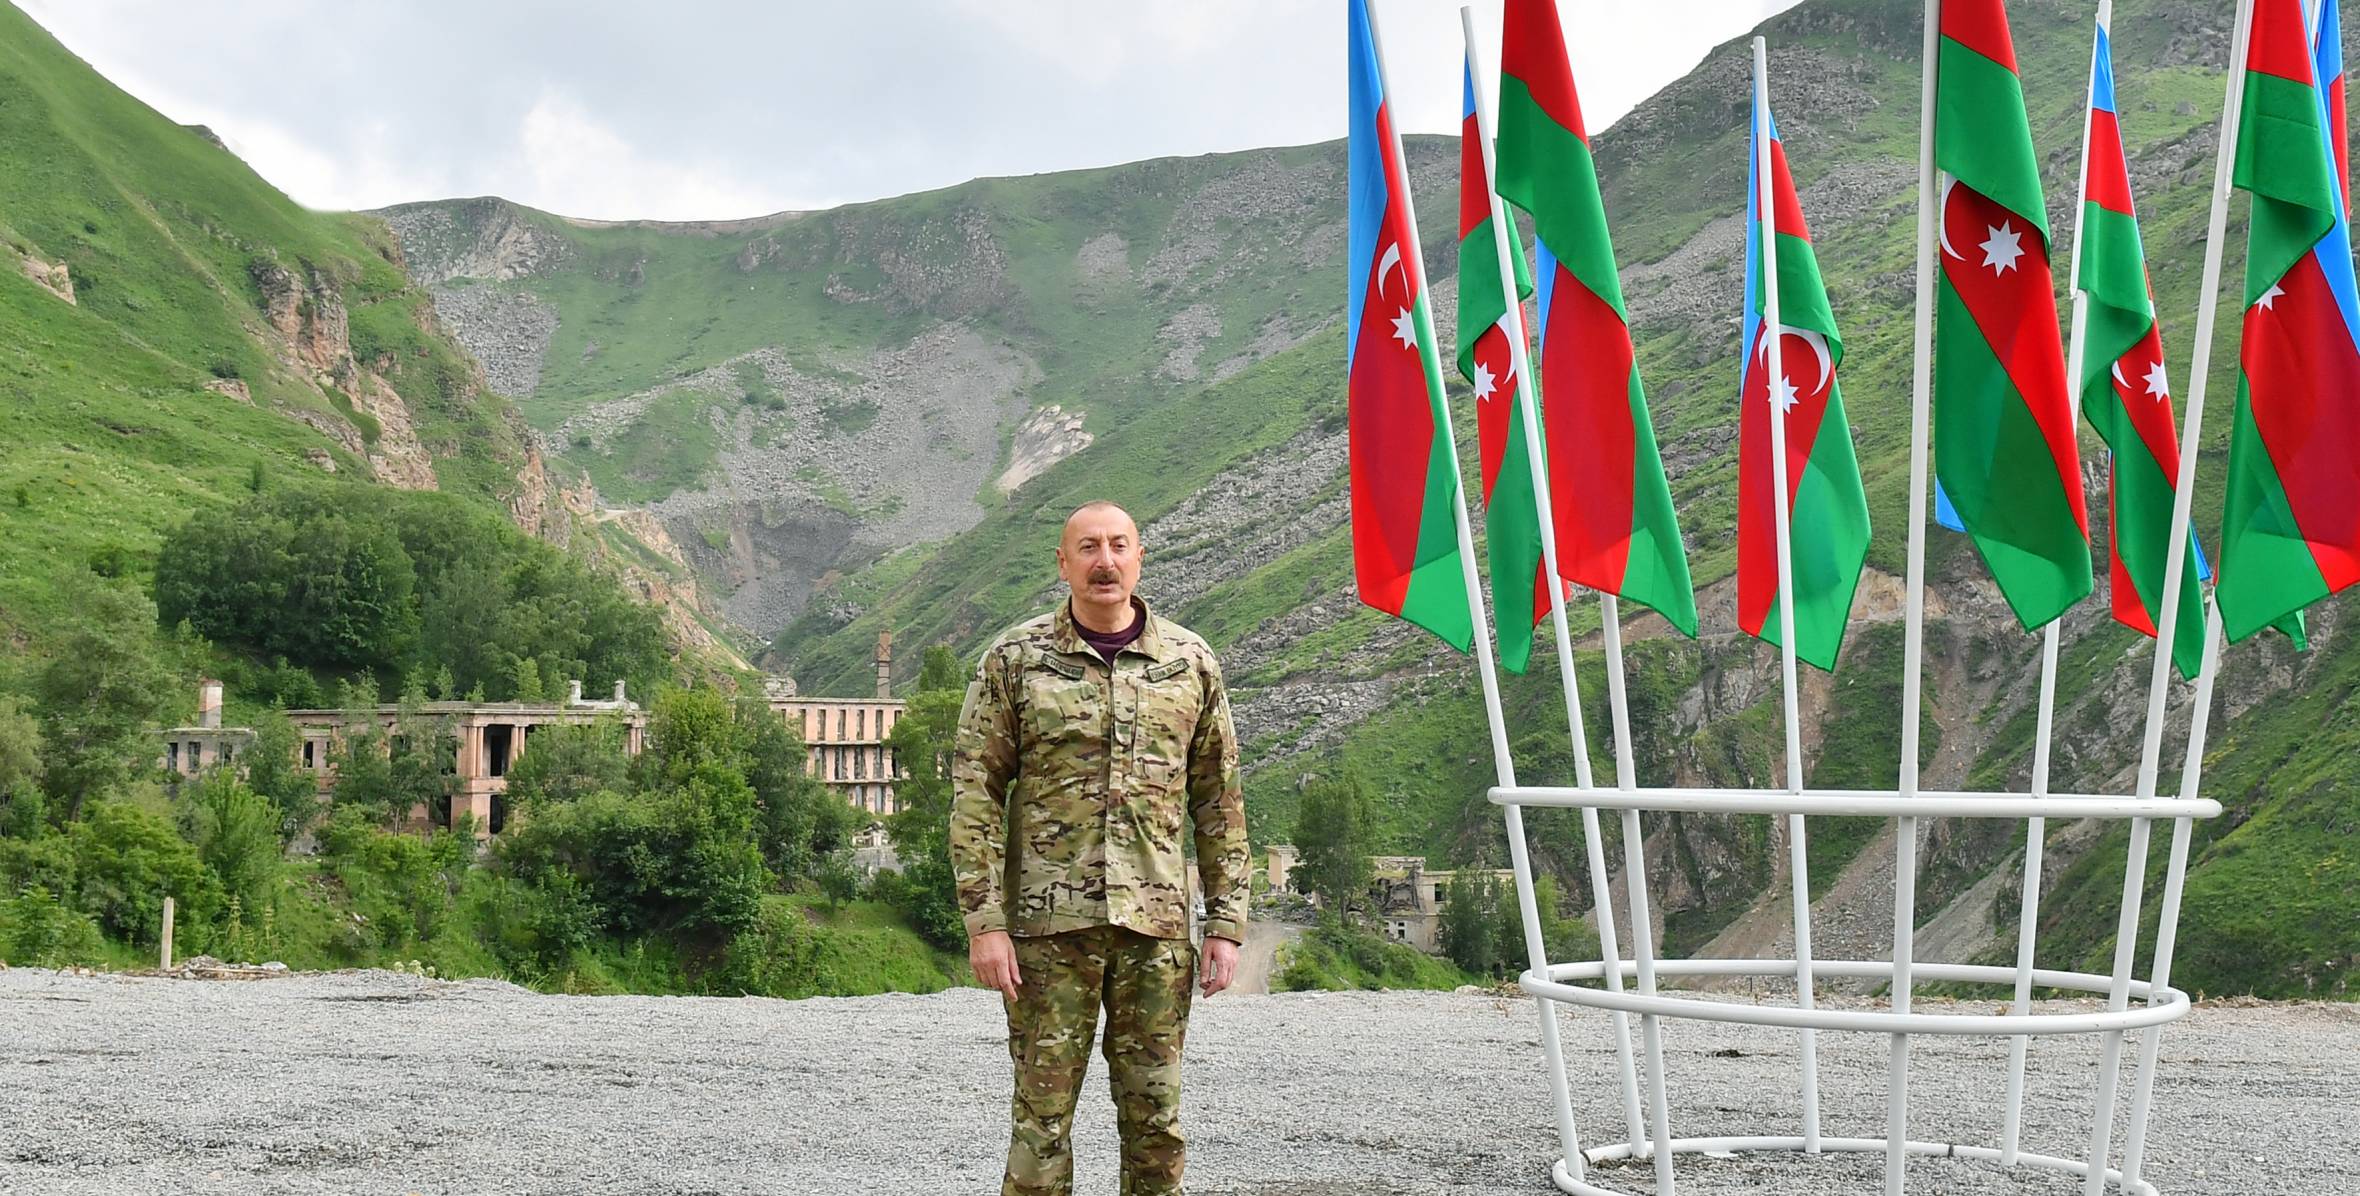 Ilham Aliyev attended a groundbreaking ceremony for the Istisu sanatorium in Kalbadjar